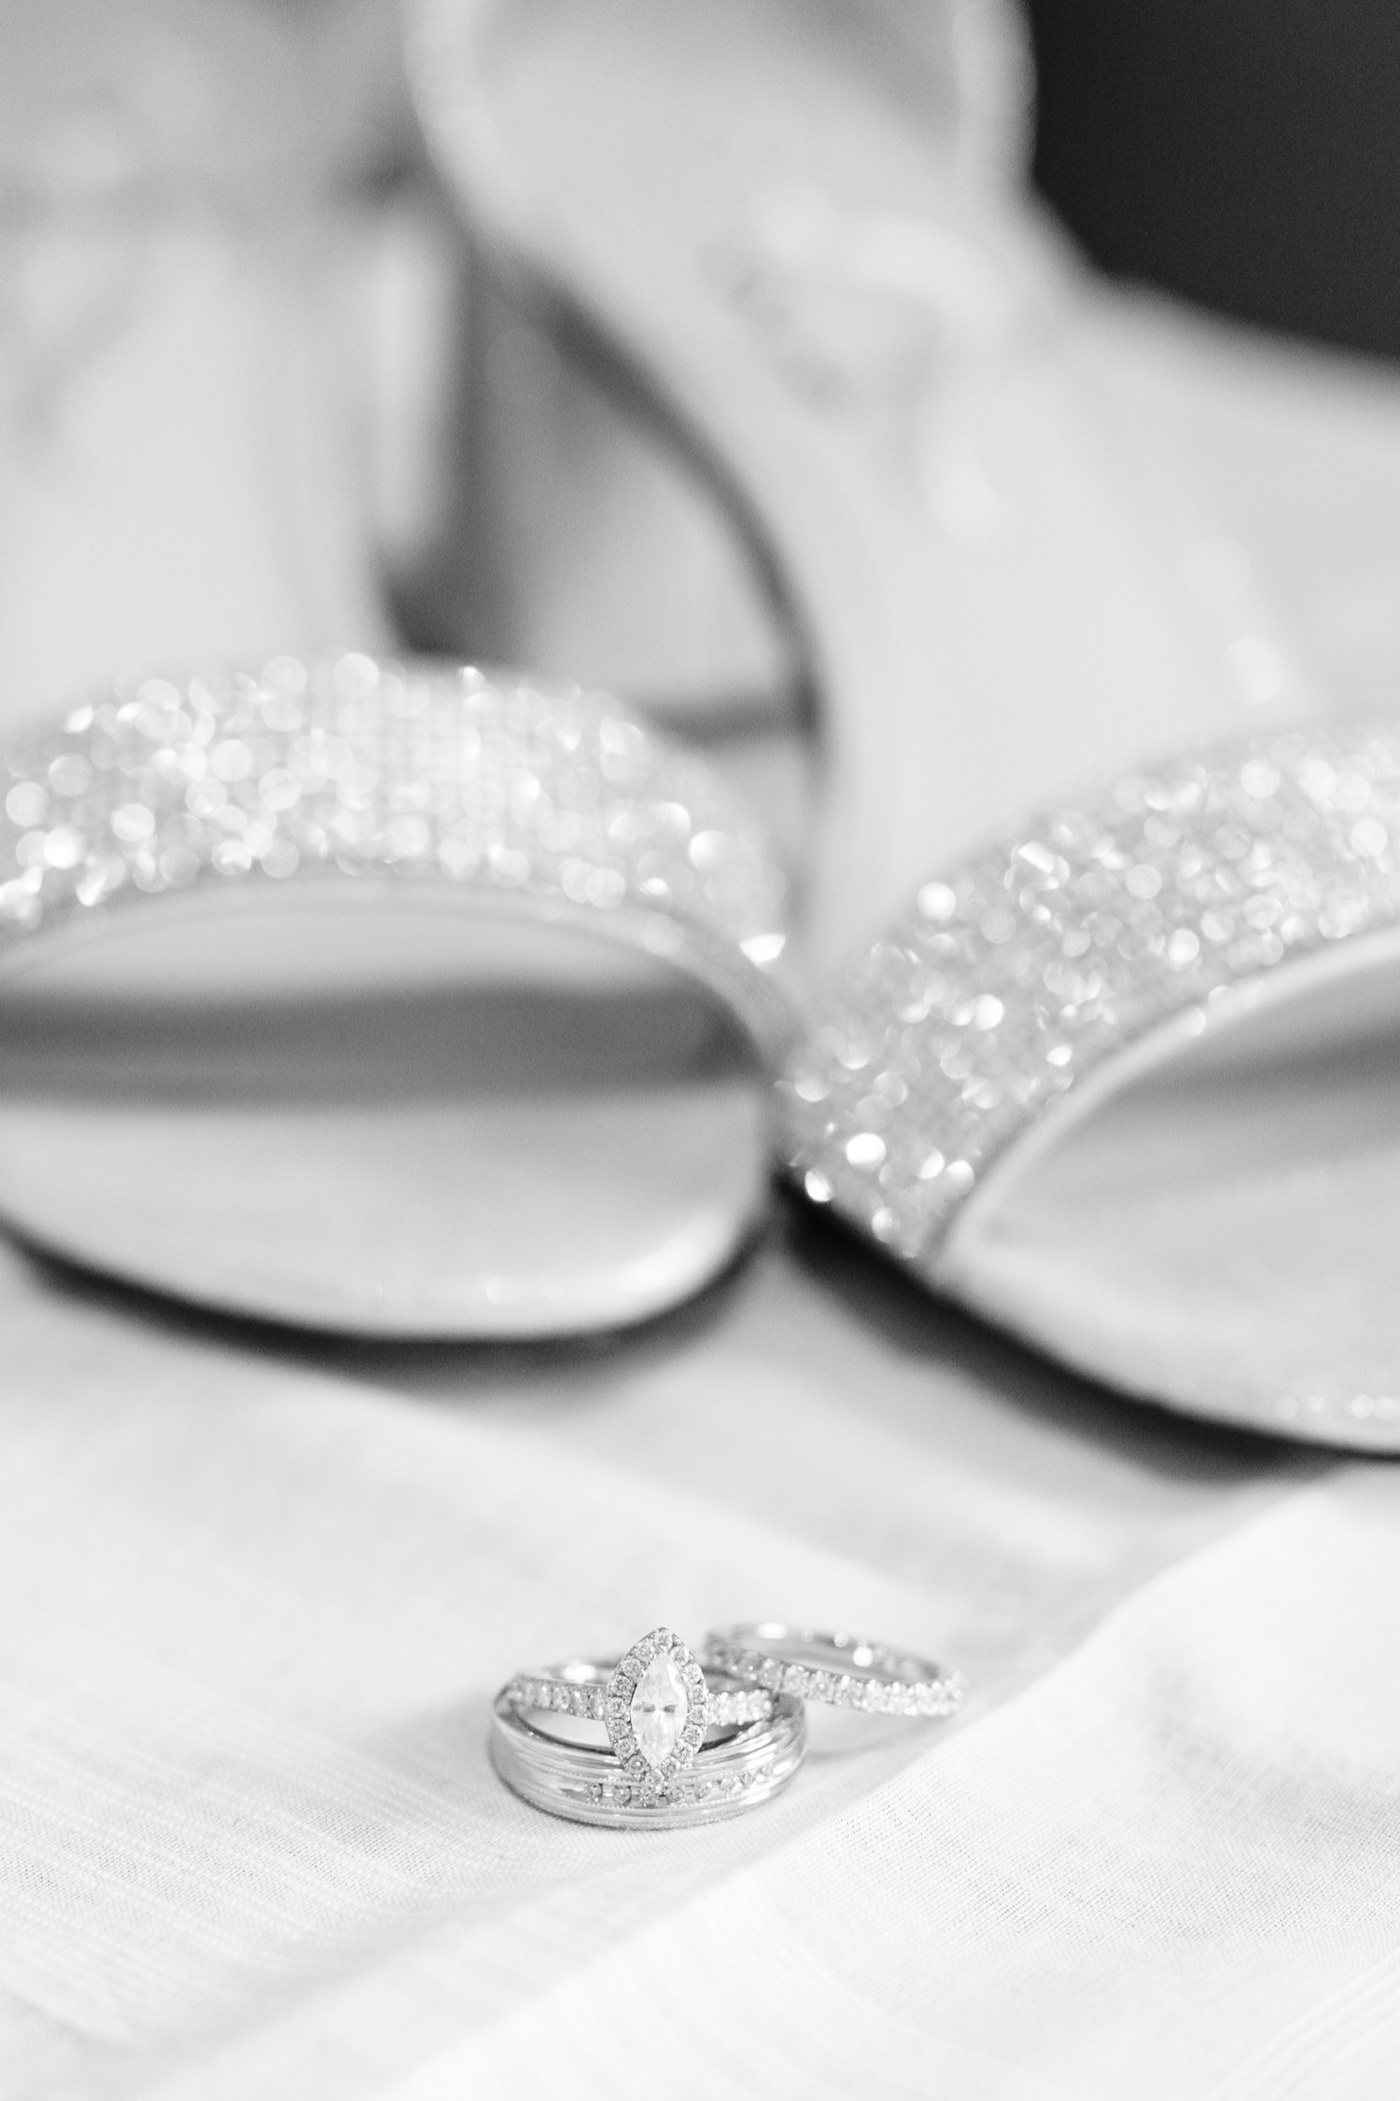 Chesapeake Bay Beach Club Wedding photos, CBBC, wedding rings, bridal shoes, Rainy wedding inspiration